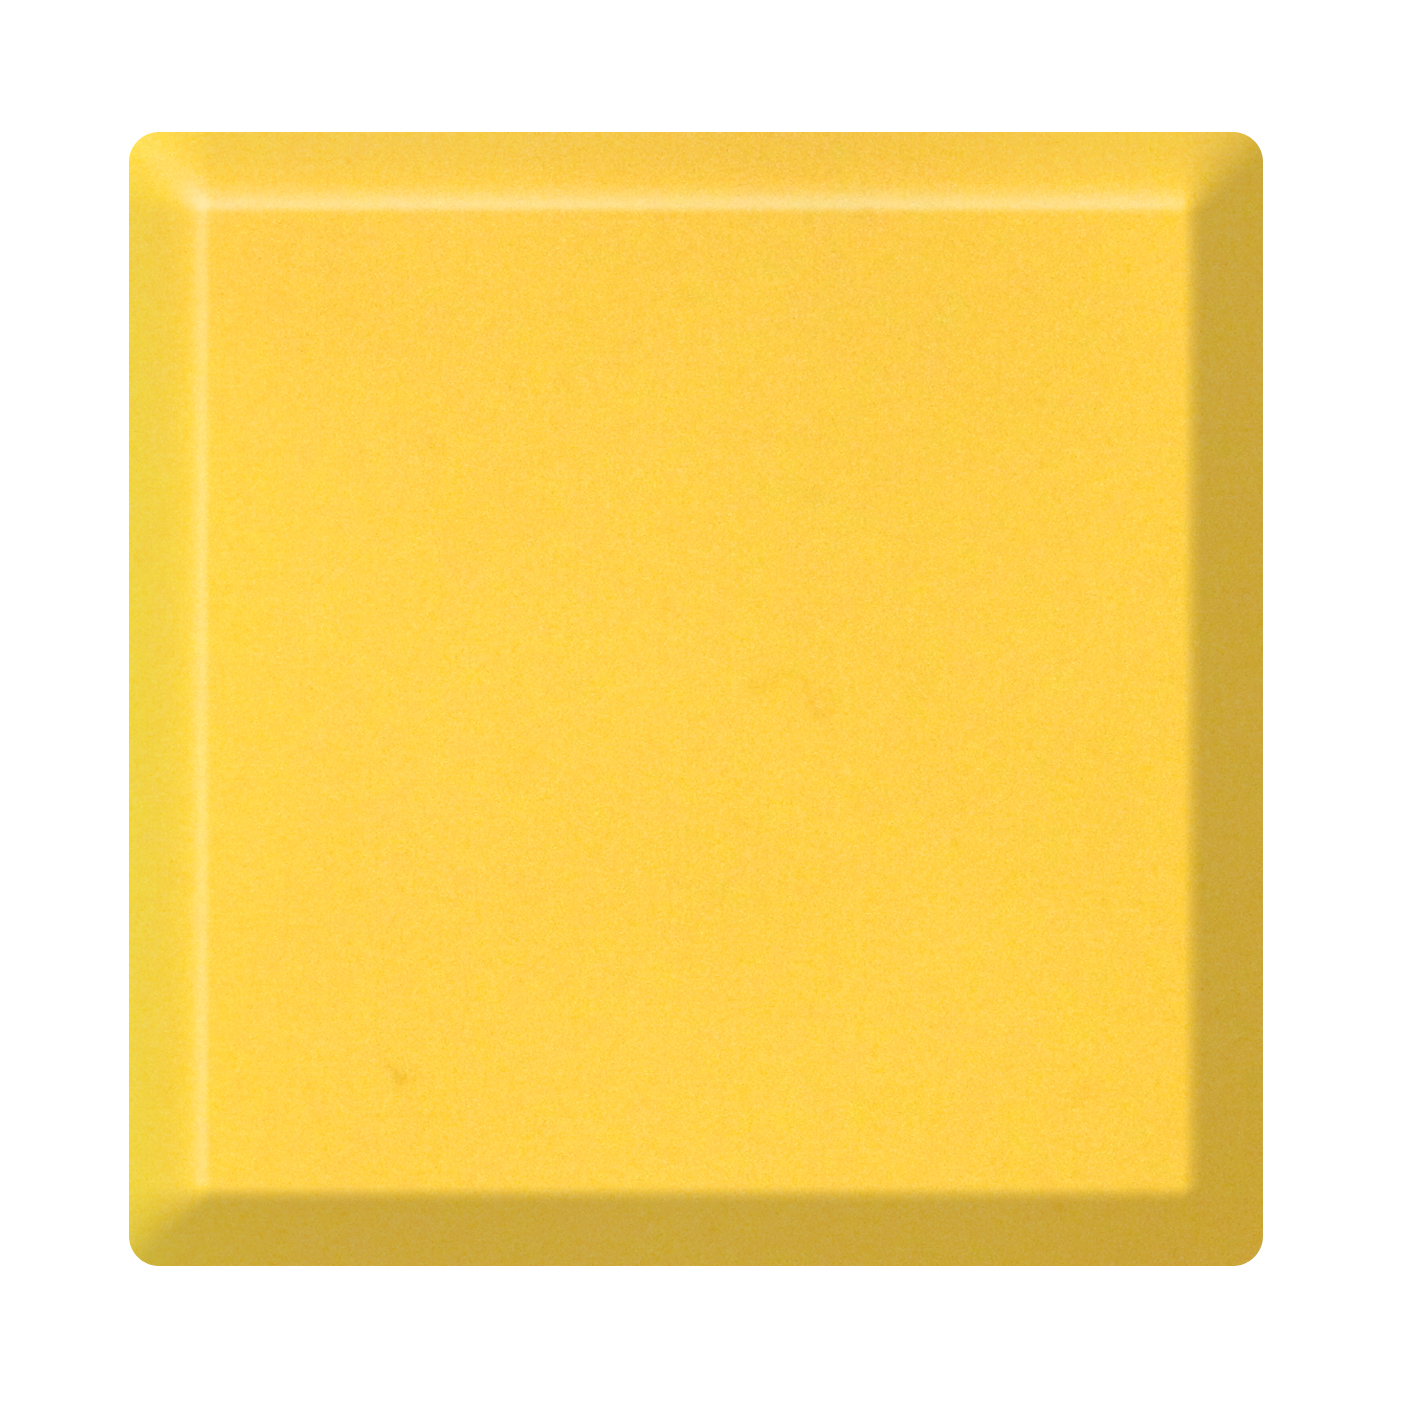 Light yellow acrylic solid surface slab